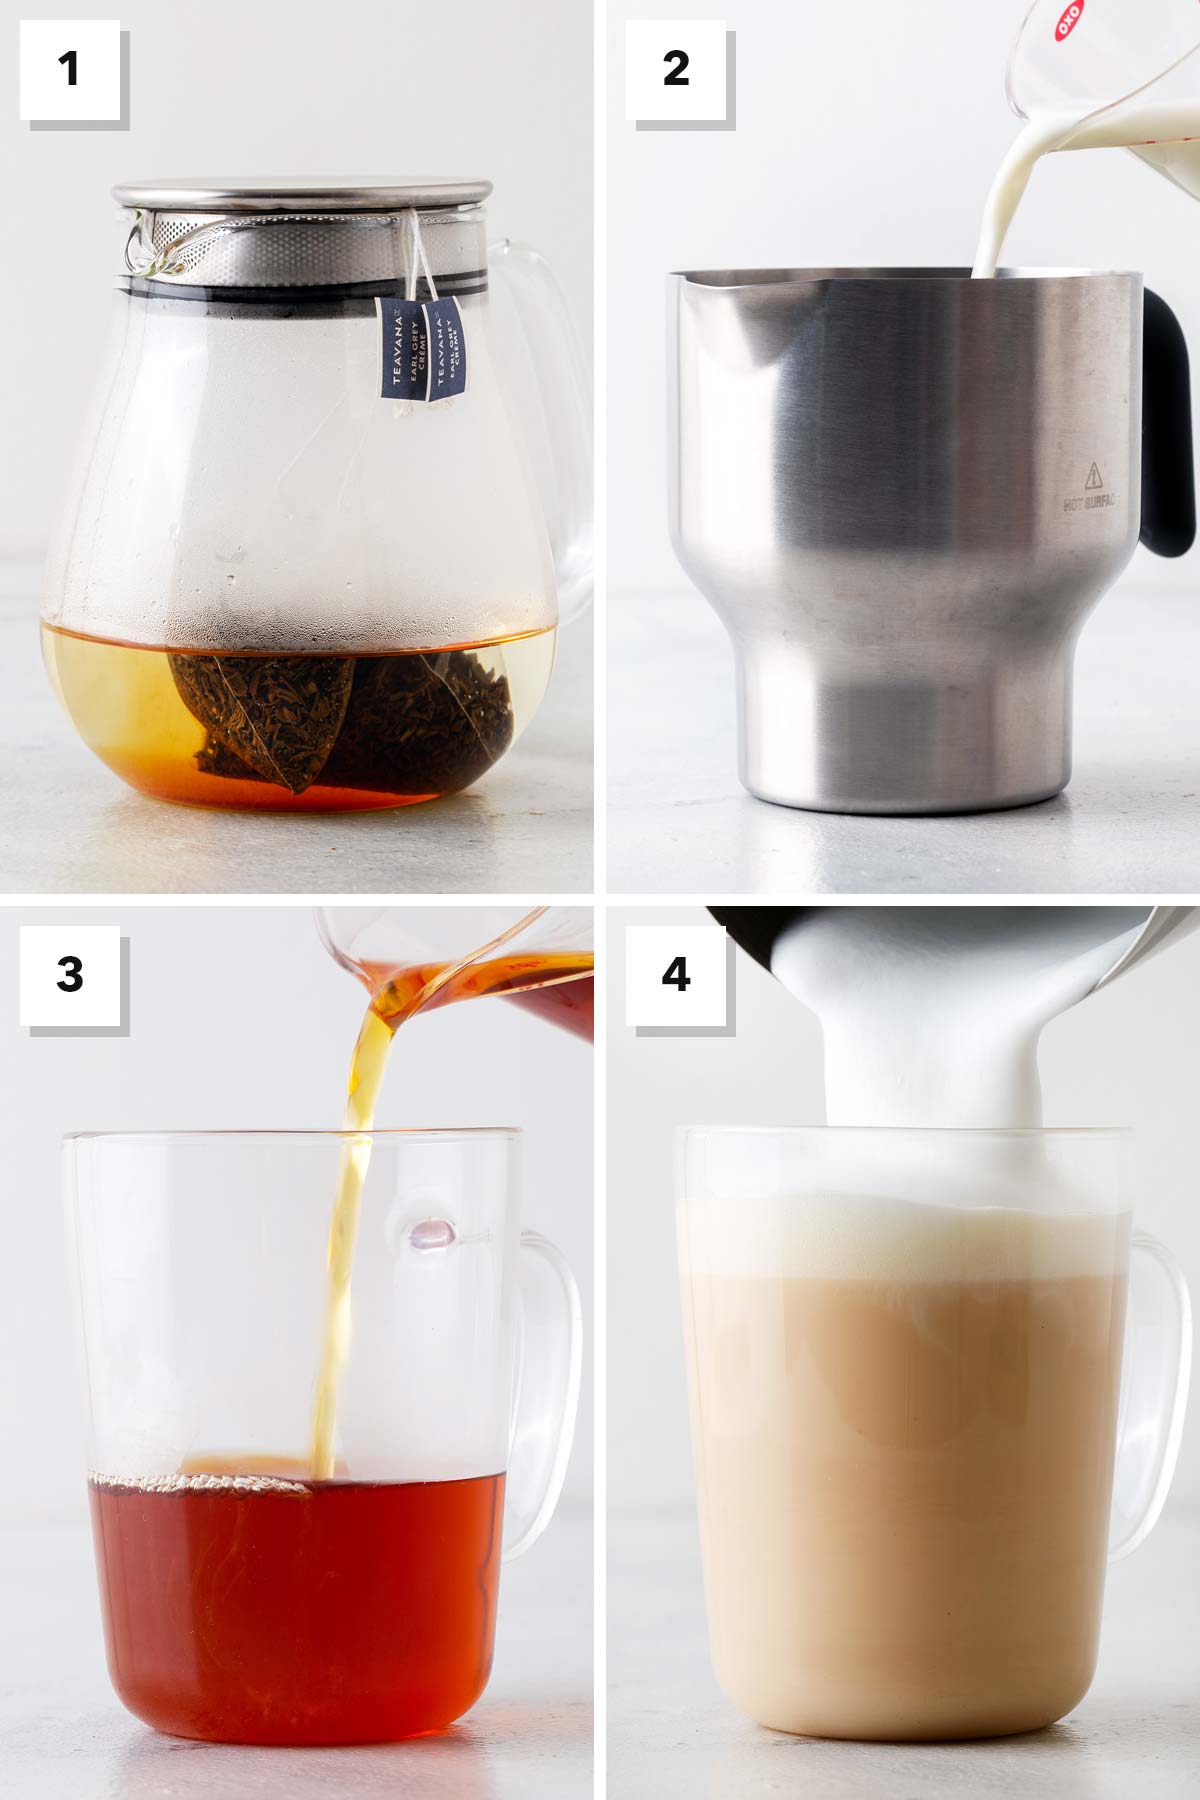 Starbucks London Fog Tea Latte Copycat step-by-step instructions.
